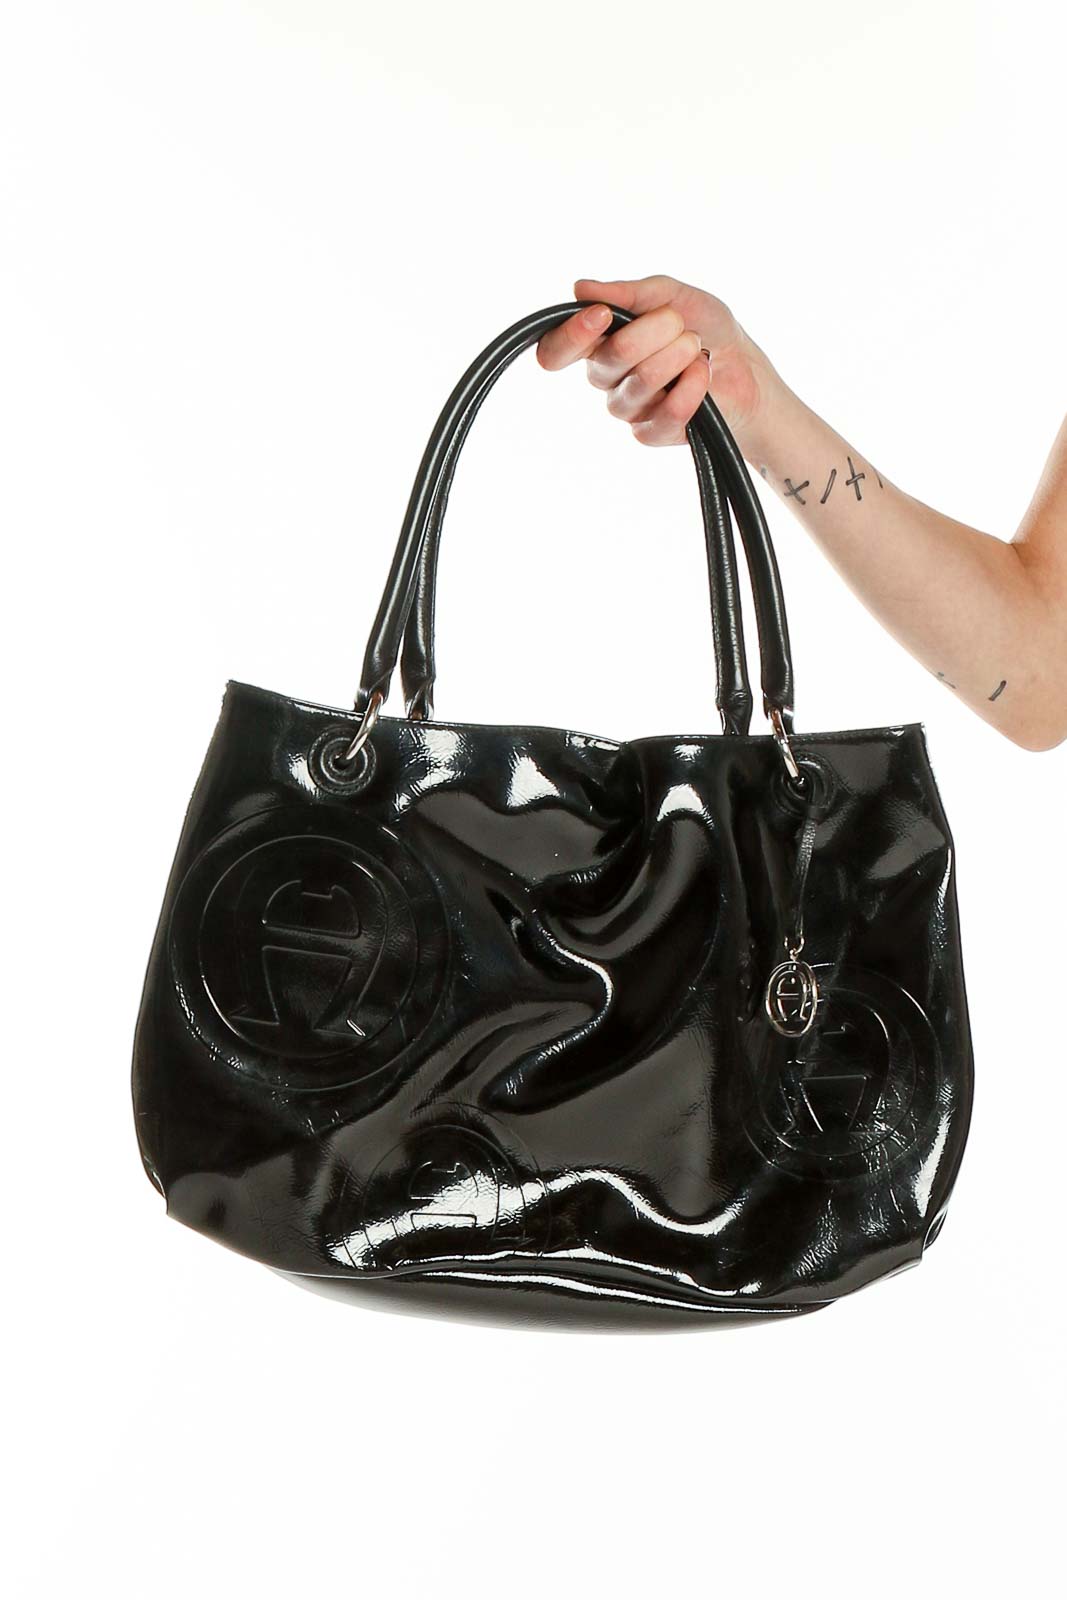 Black Shiny Leather Bag Front